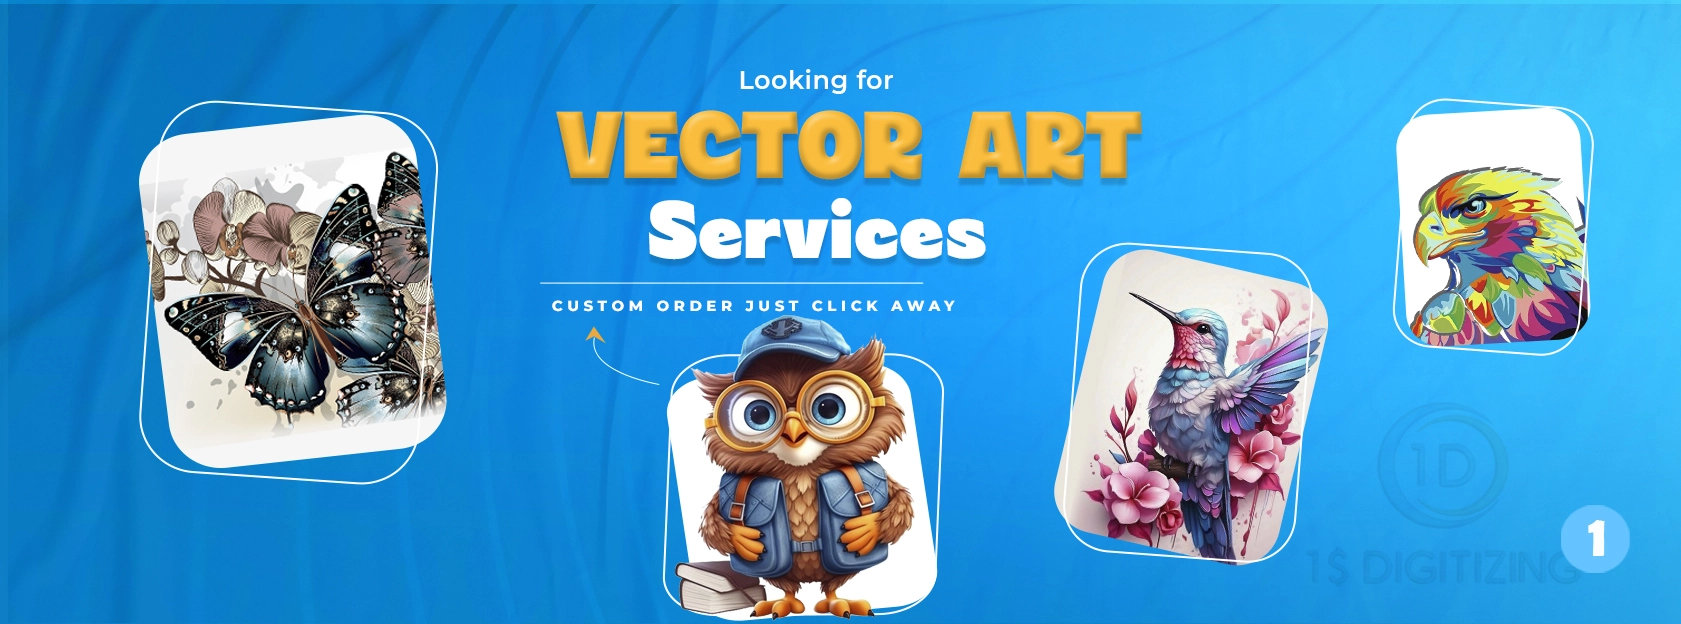 vector art services